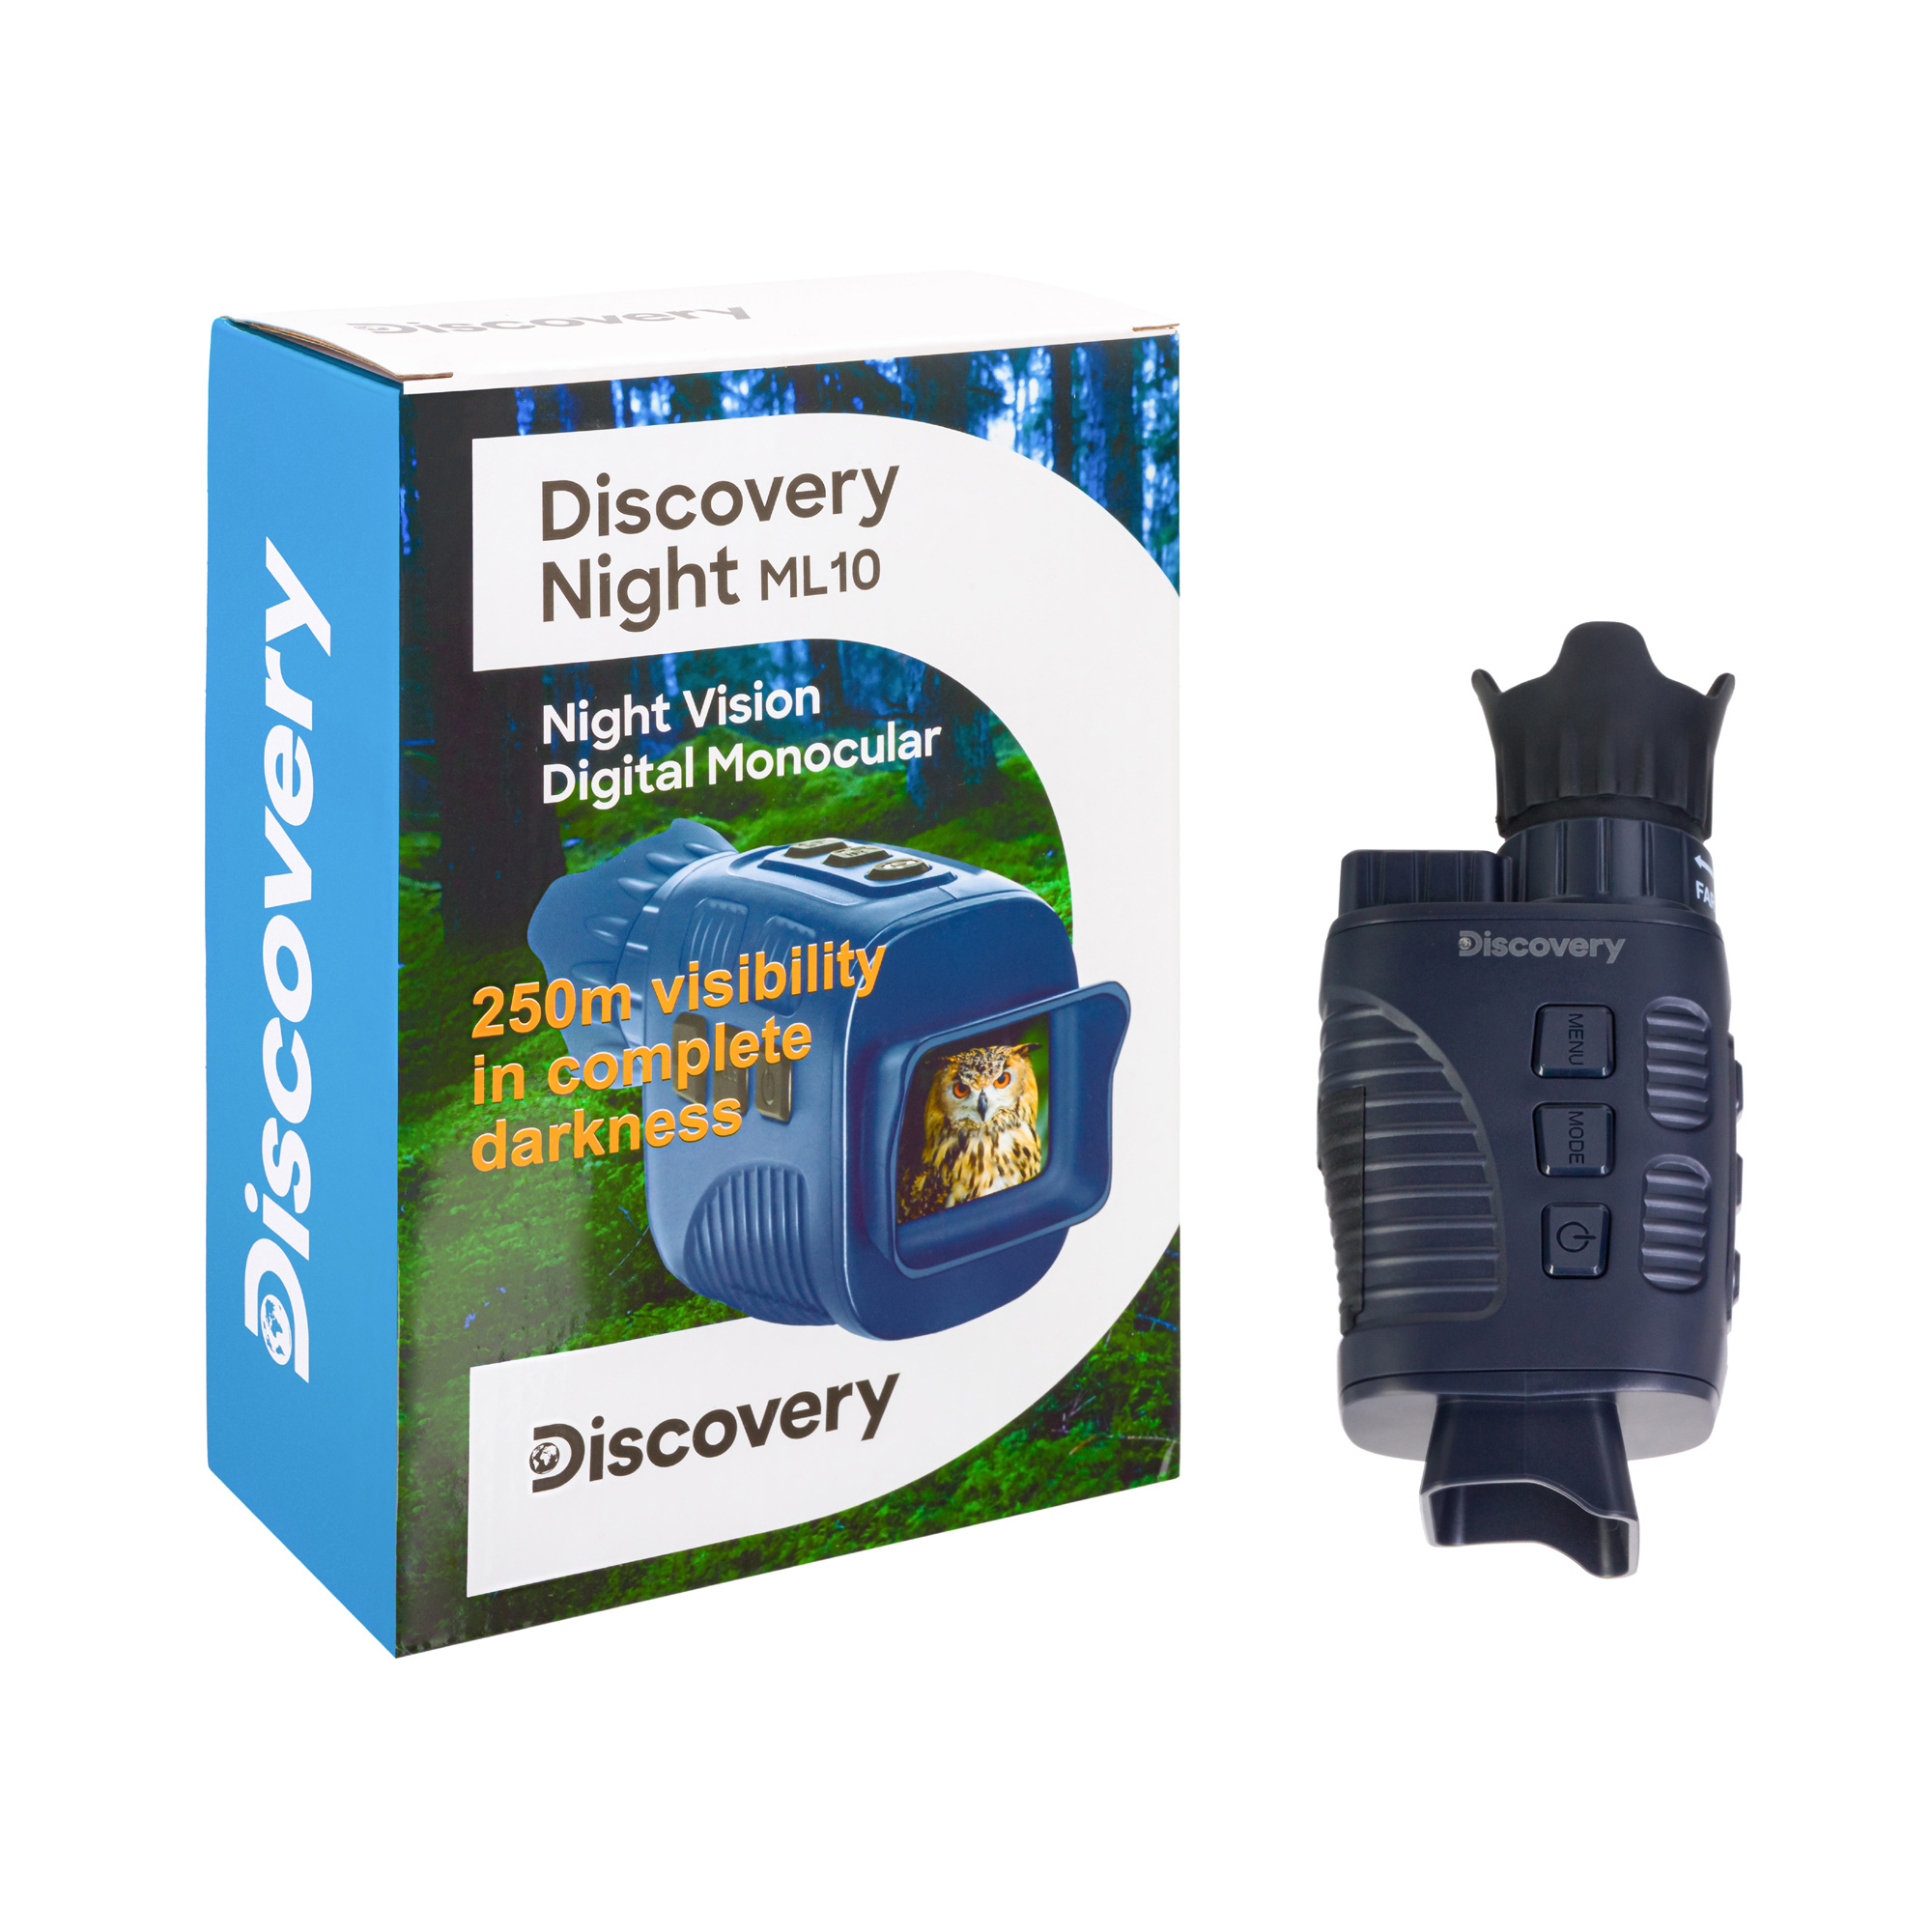 Night discover. Прибор ночного видения Дискавери. Инструкция к тепловизору Discovery Night ml10.